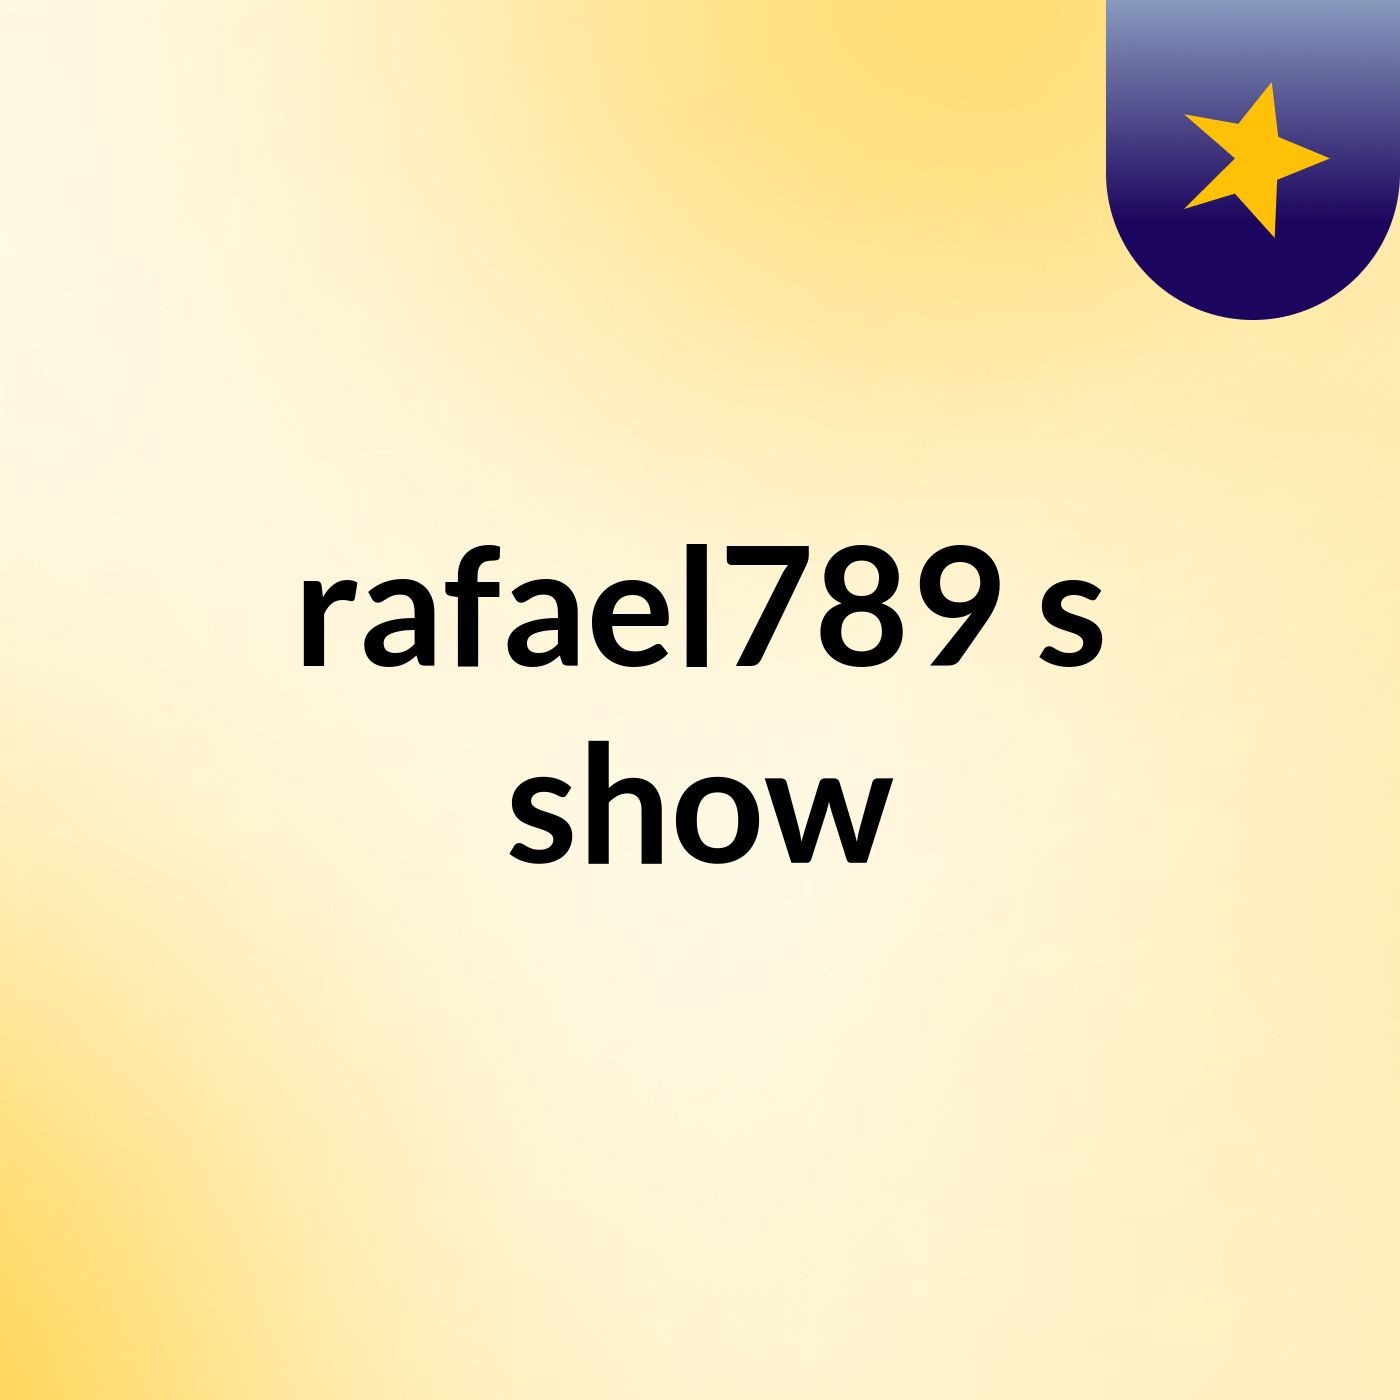 rafael789's show